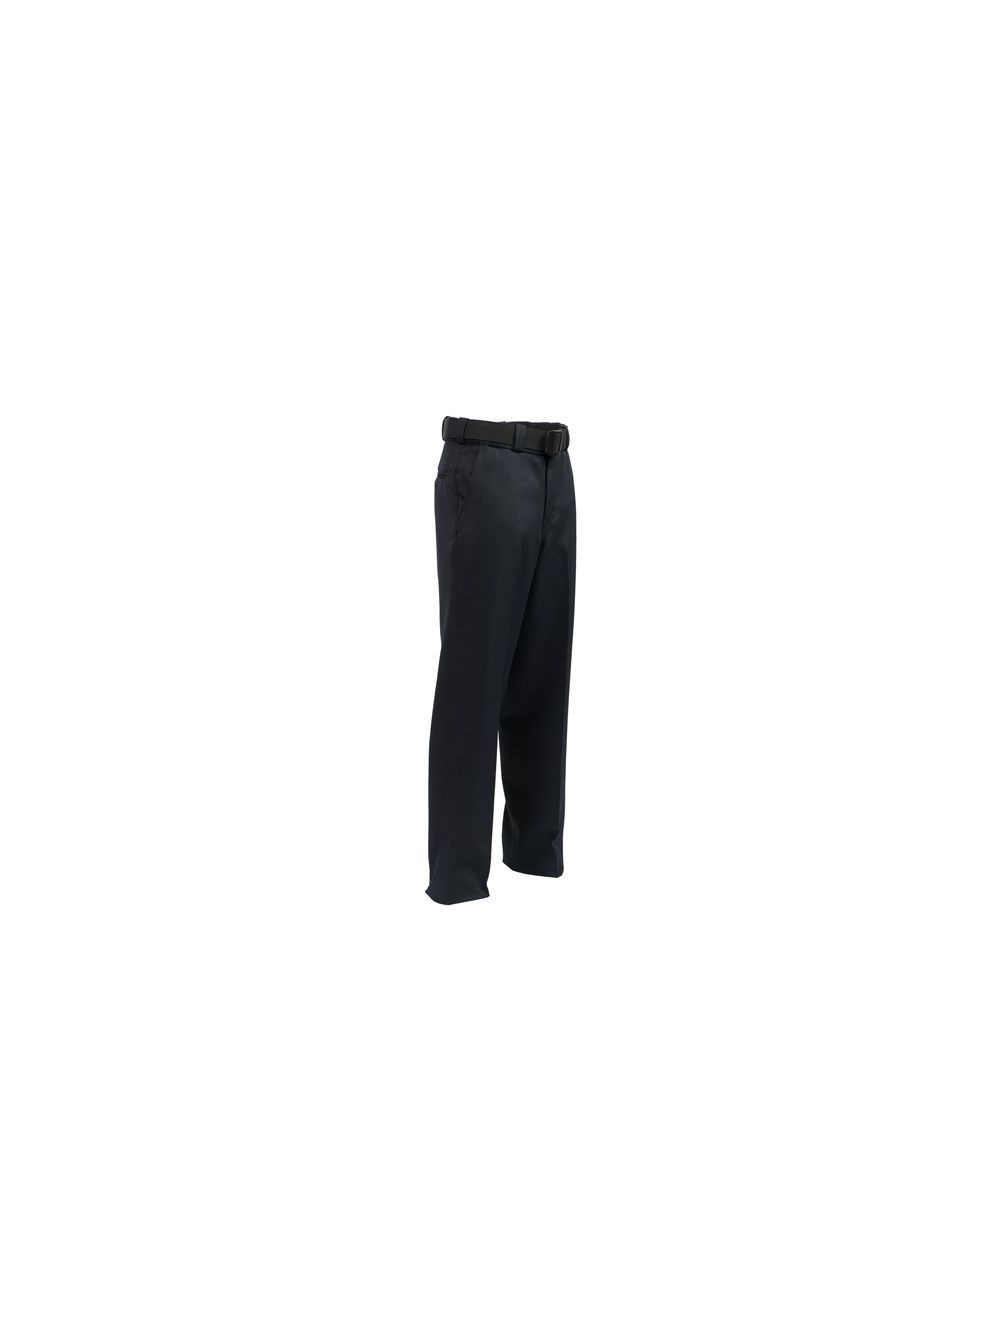 Distinction 4-pocket Pants